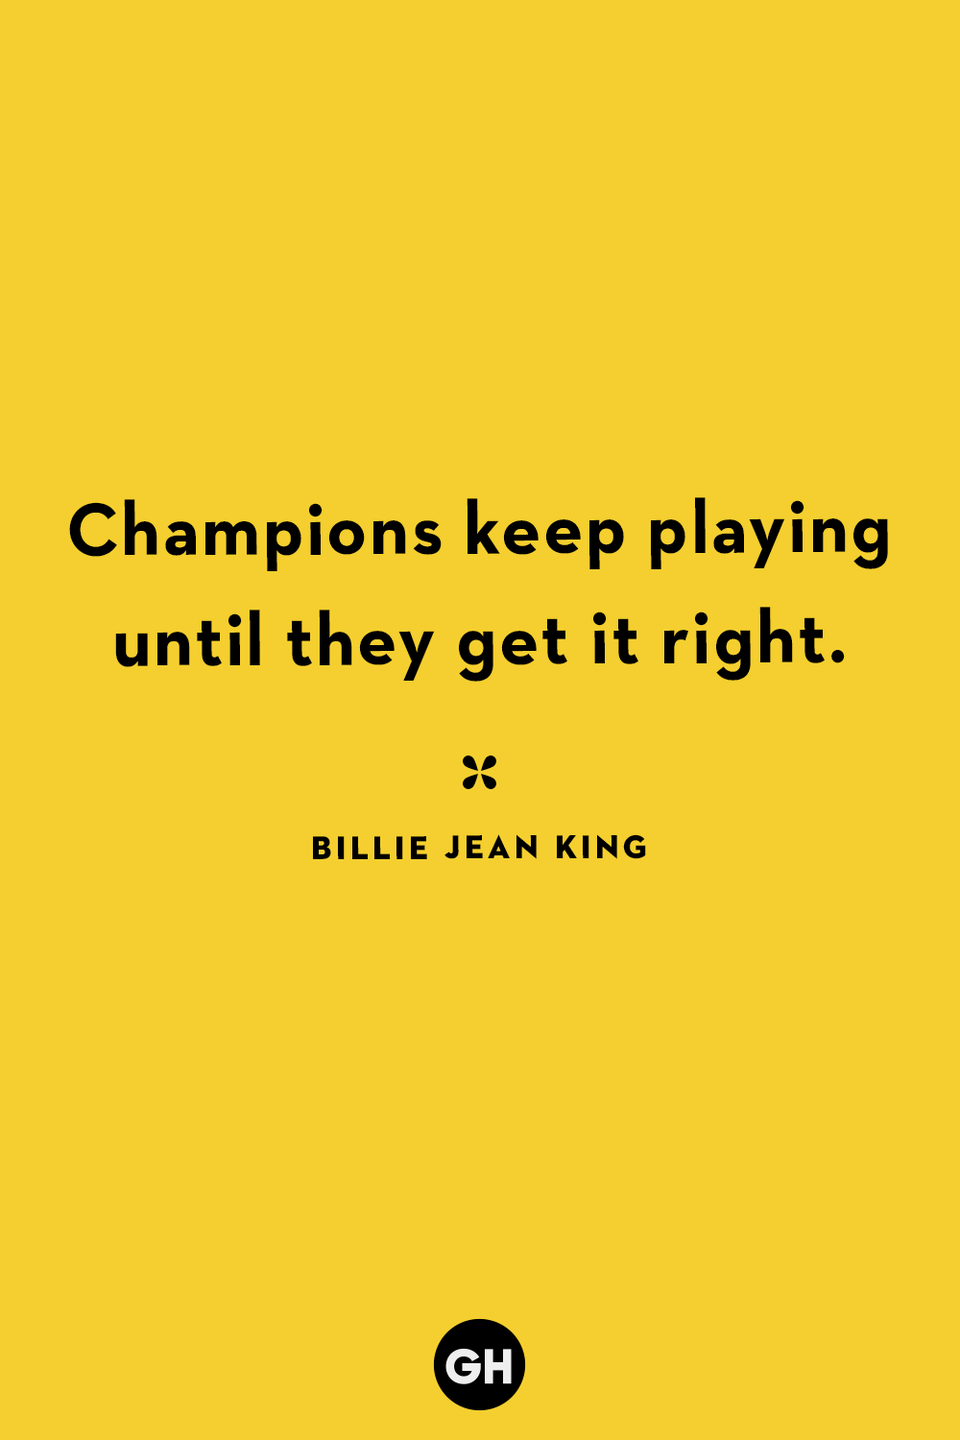 7) Billie Jean King